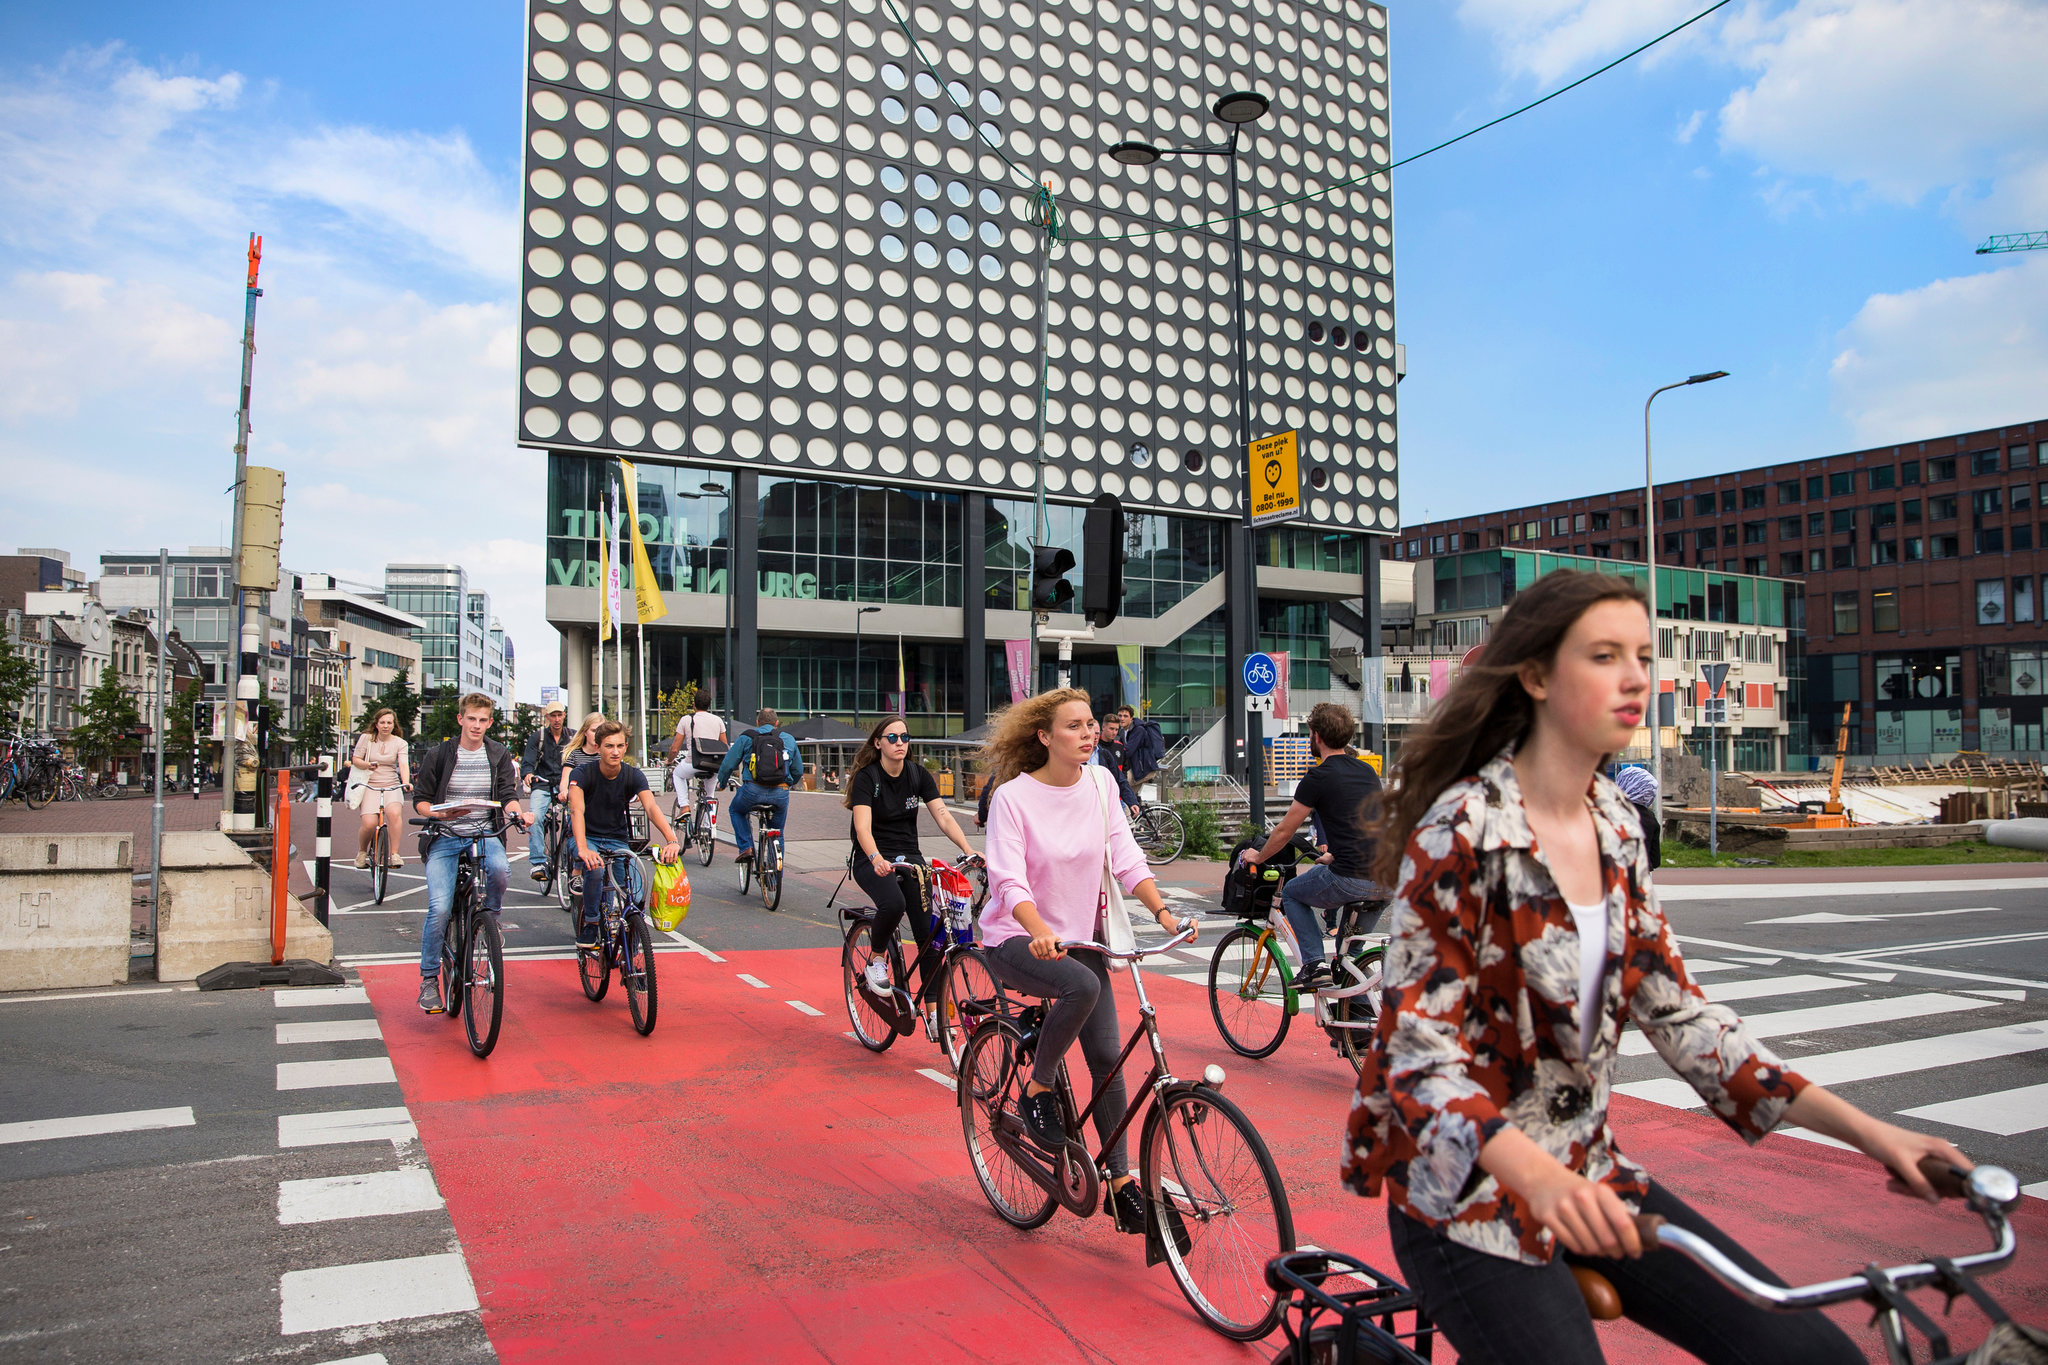 Utrecht, Netherlands named the world's most bike-friendly city